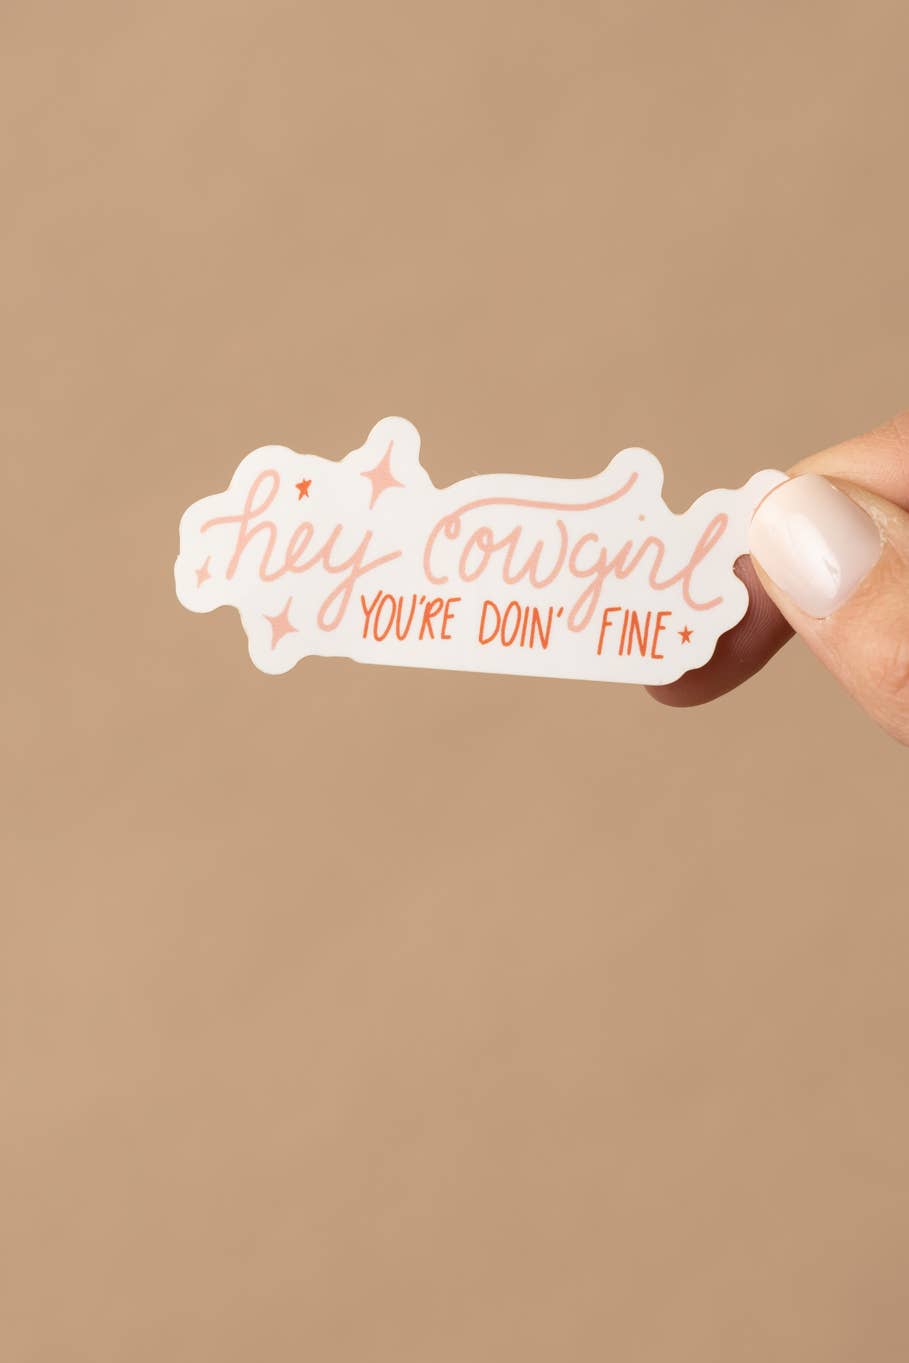 Hey Cowgirl, You're Doin' Fine Sticker